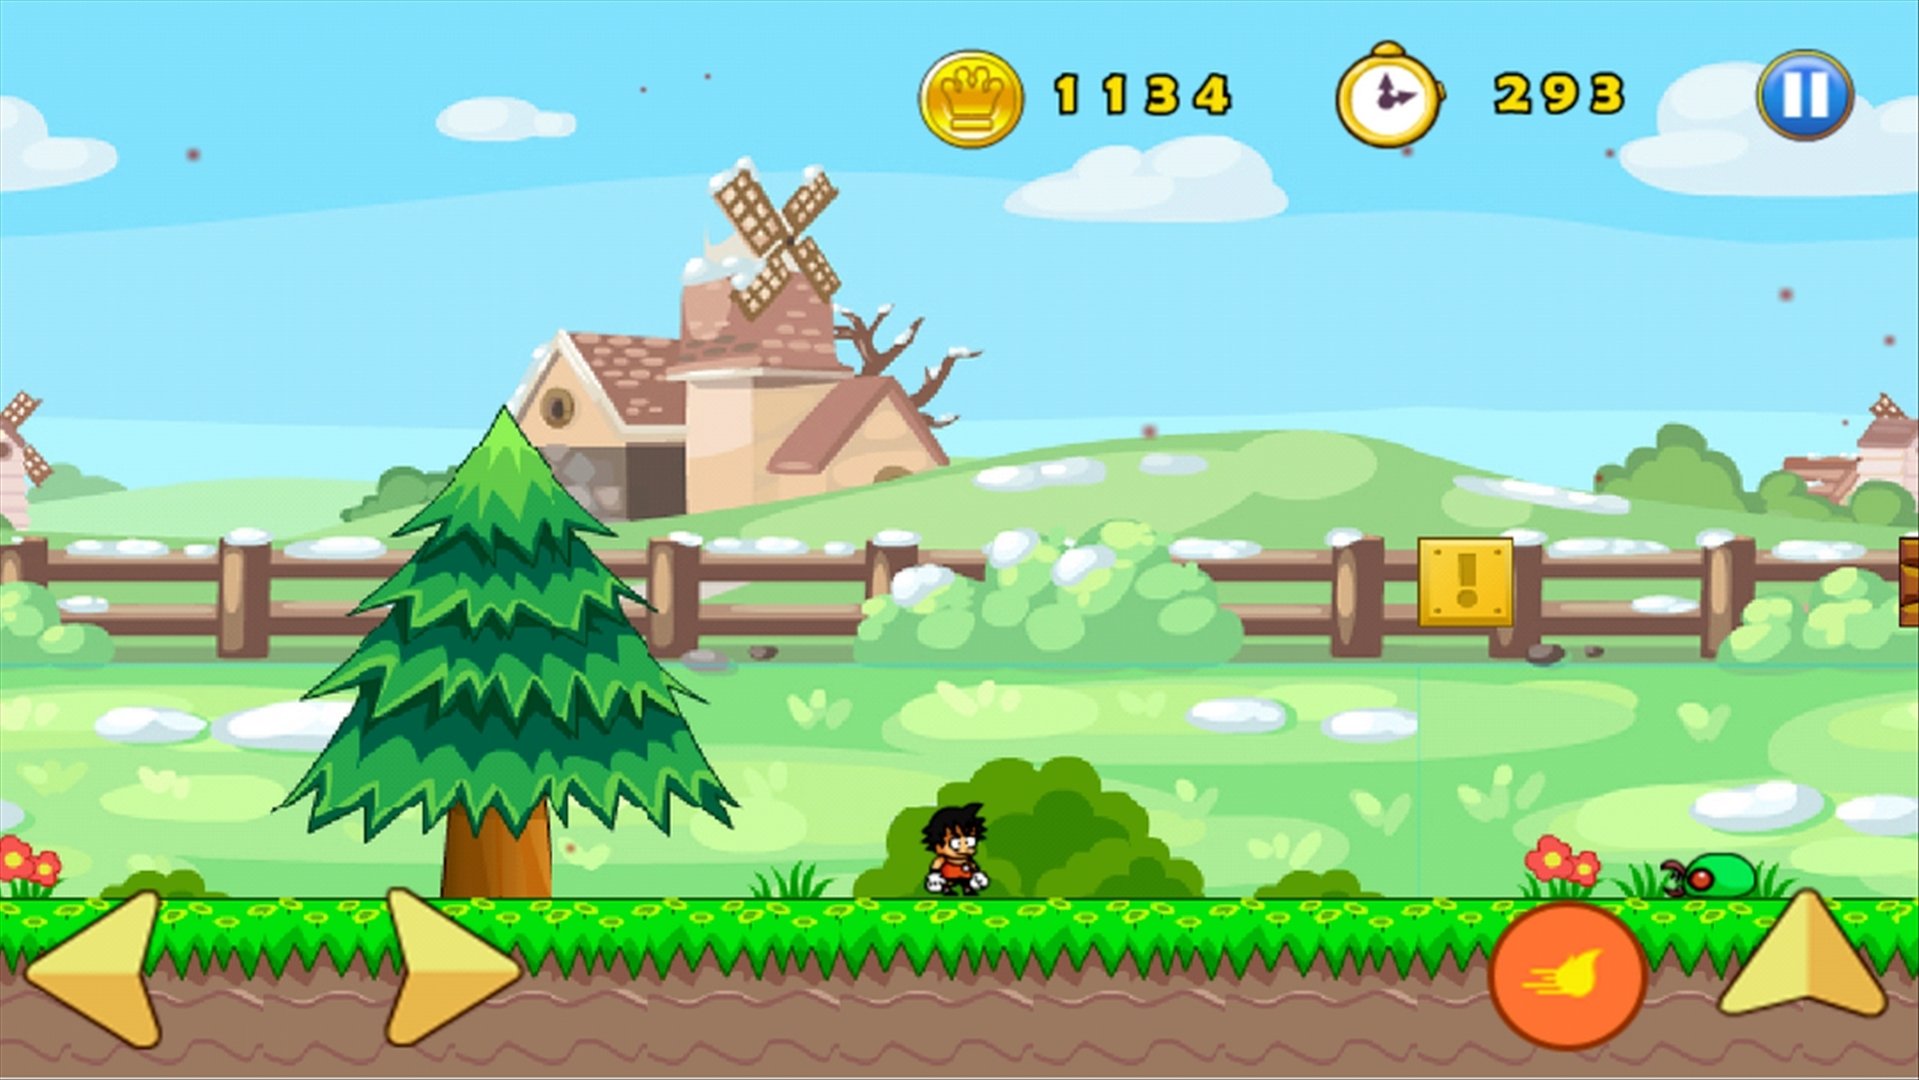 Adventures of Cat Mario APK (Android Game) - Baixar Grátis